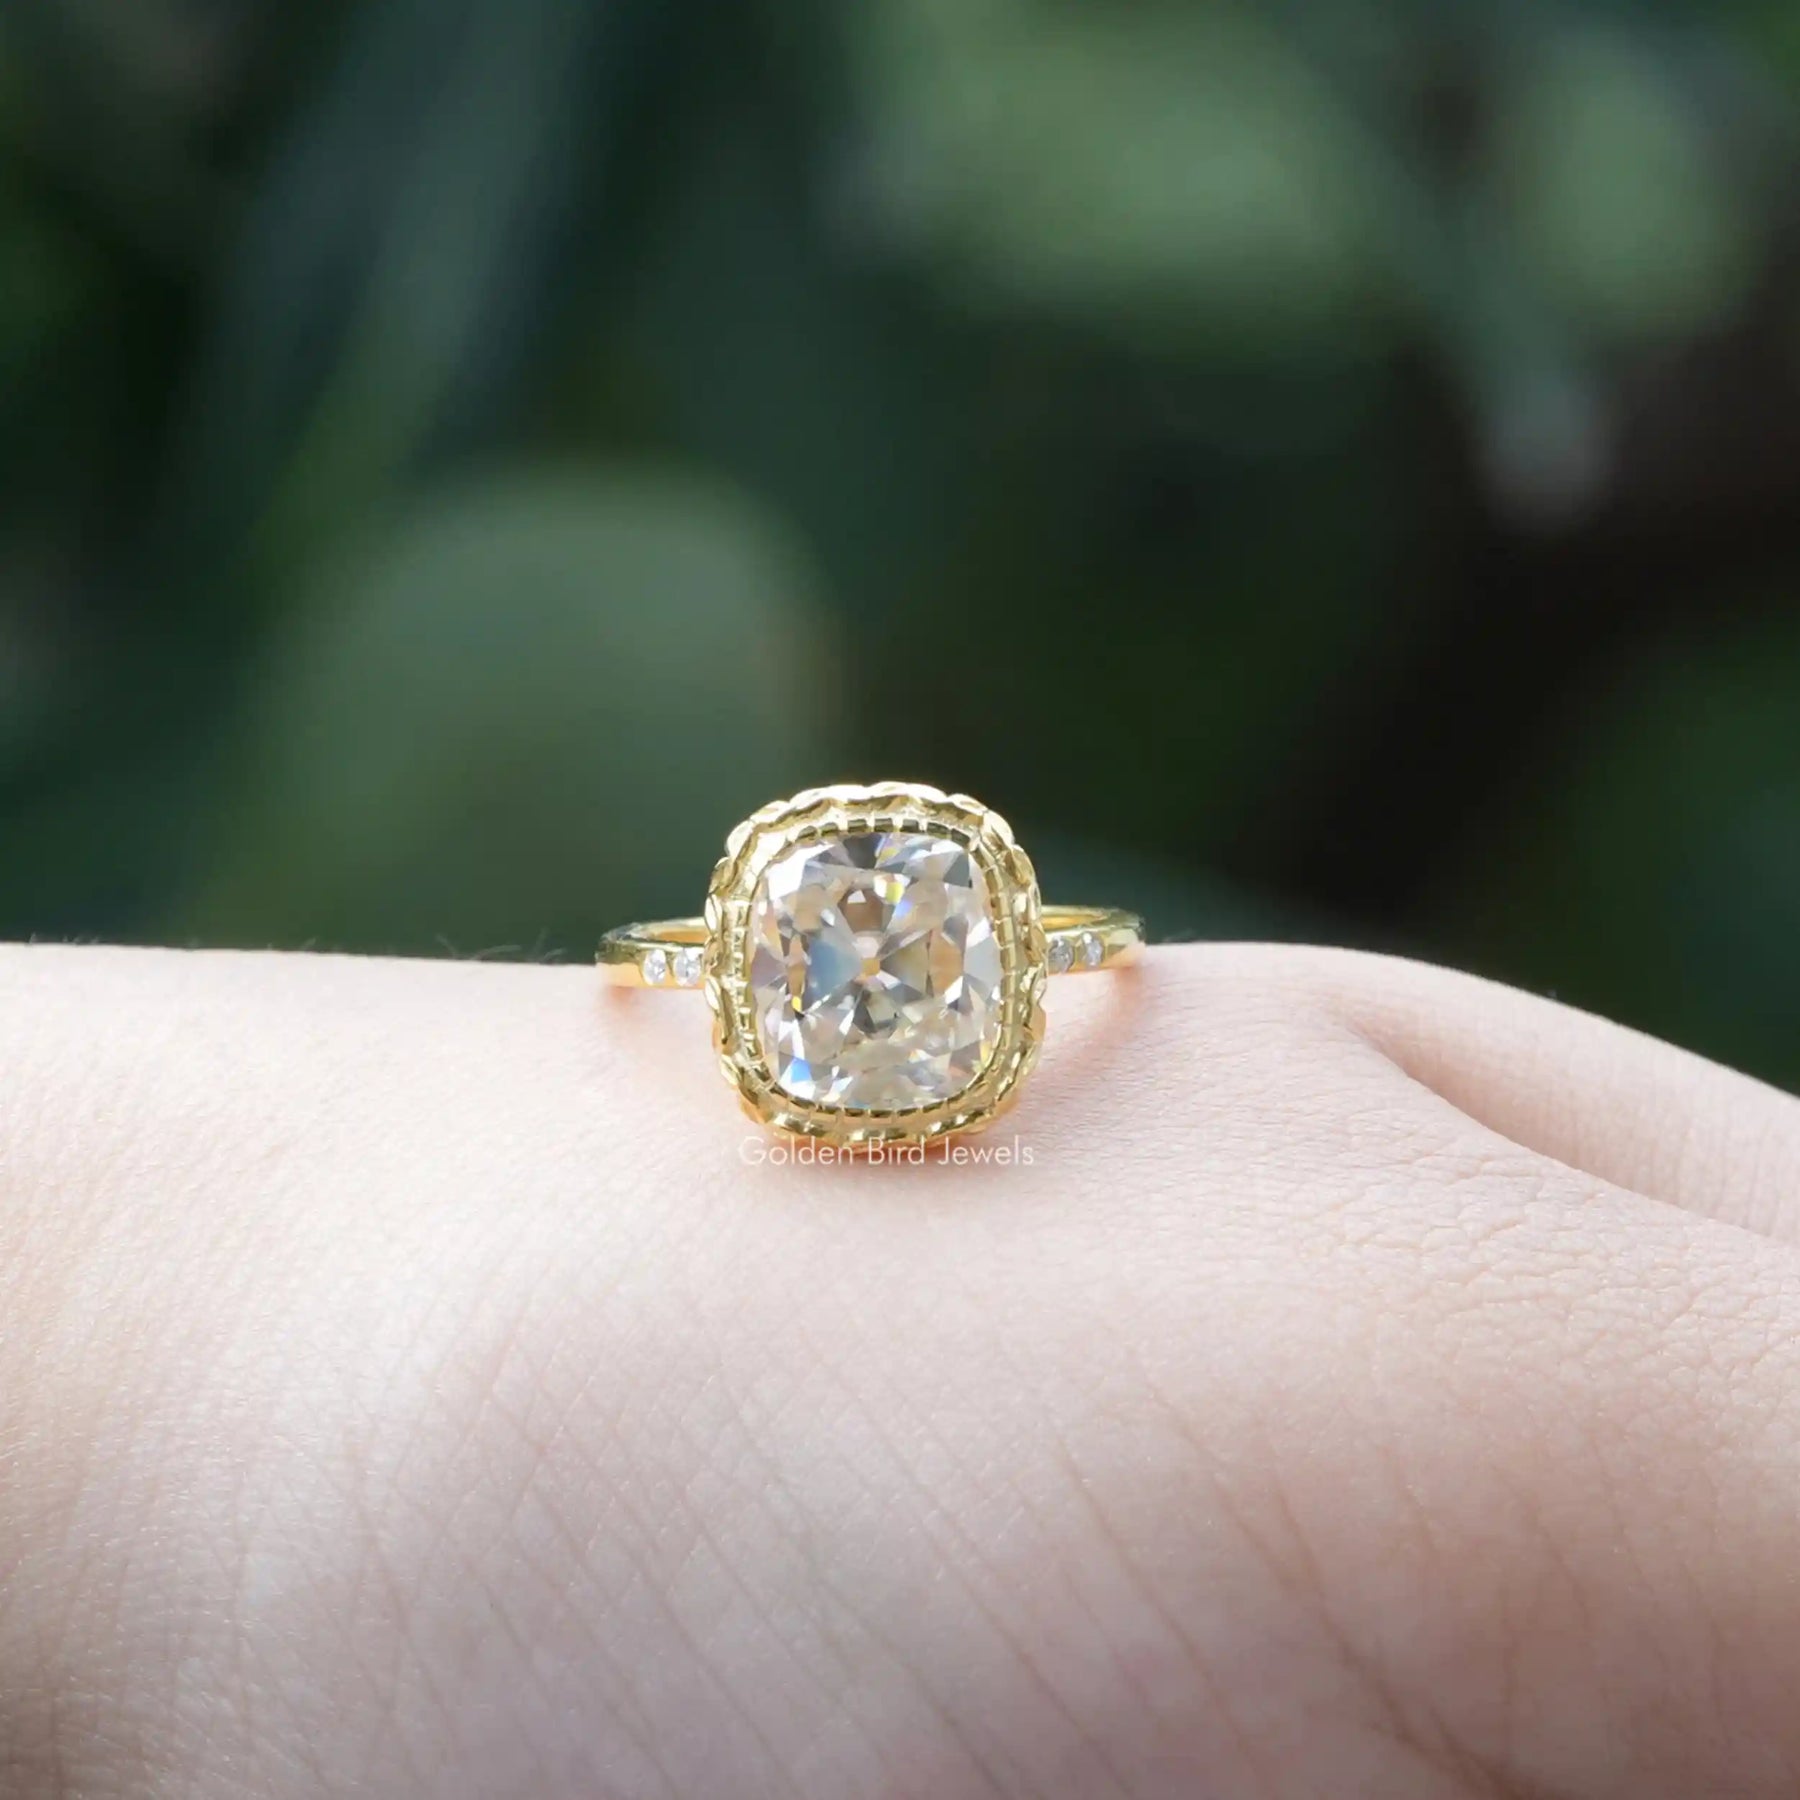 [4 carat cushion cut bezel set ring made of side round cut stones]-[Golden Bird Jewels]